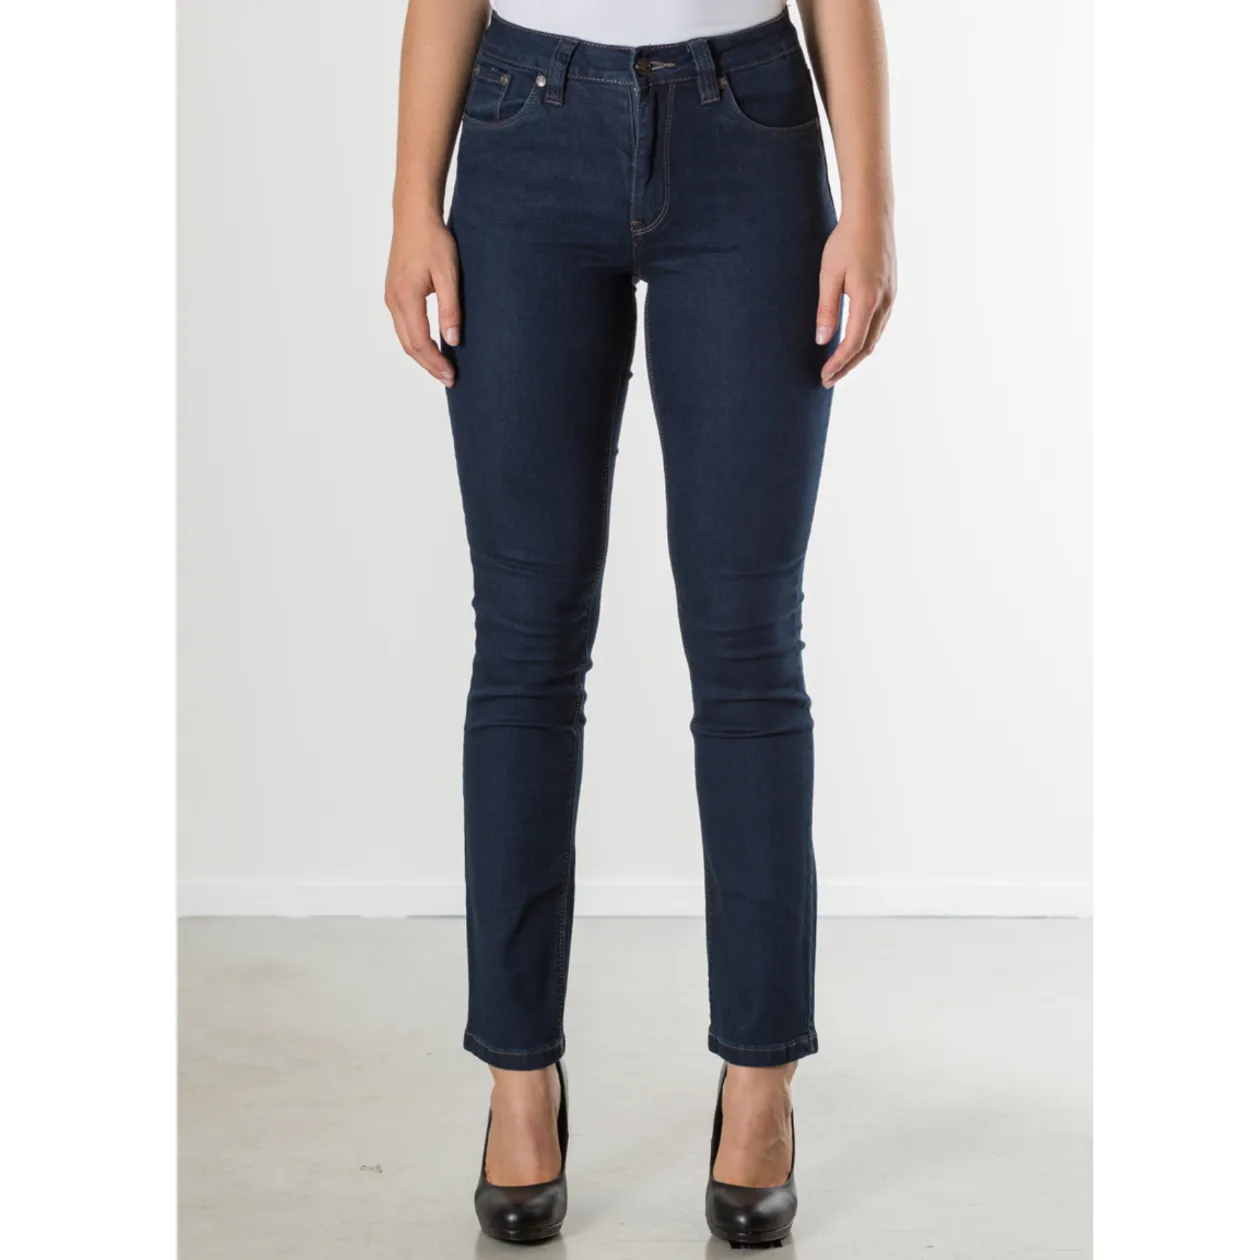 vloeistof Welvarend gips Stretch jeans vrouwen | High waist, Slim fit, Low waist | broekenbinkie.com